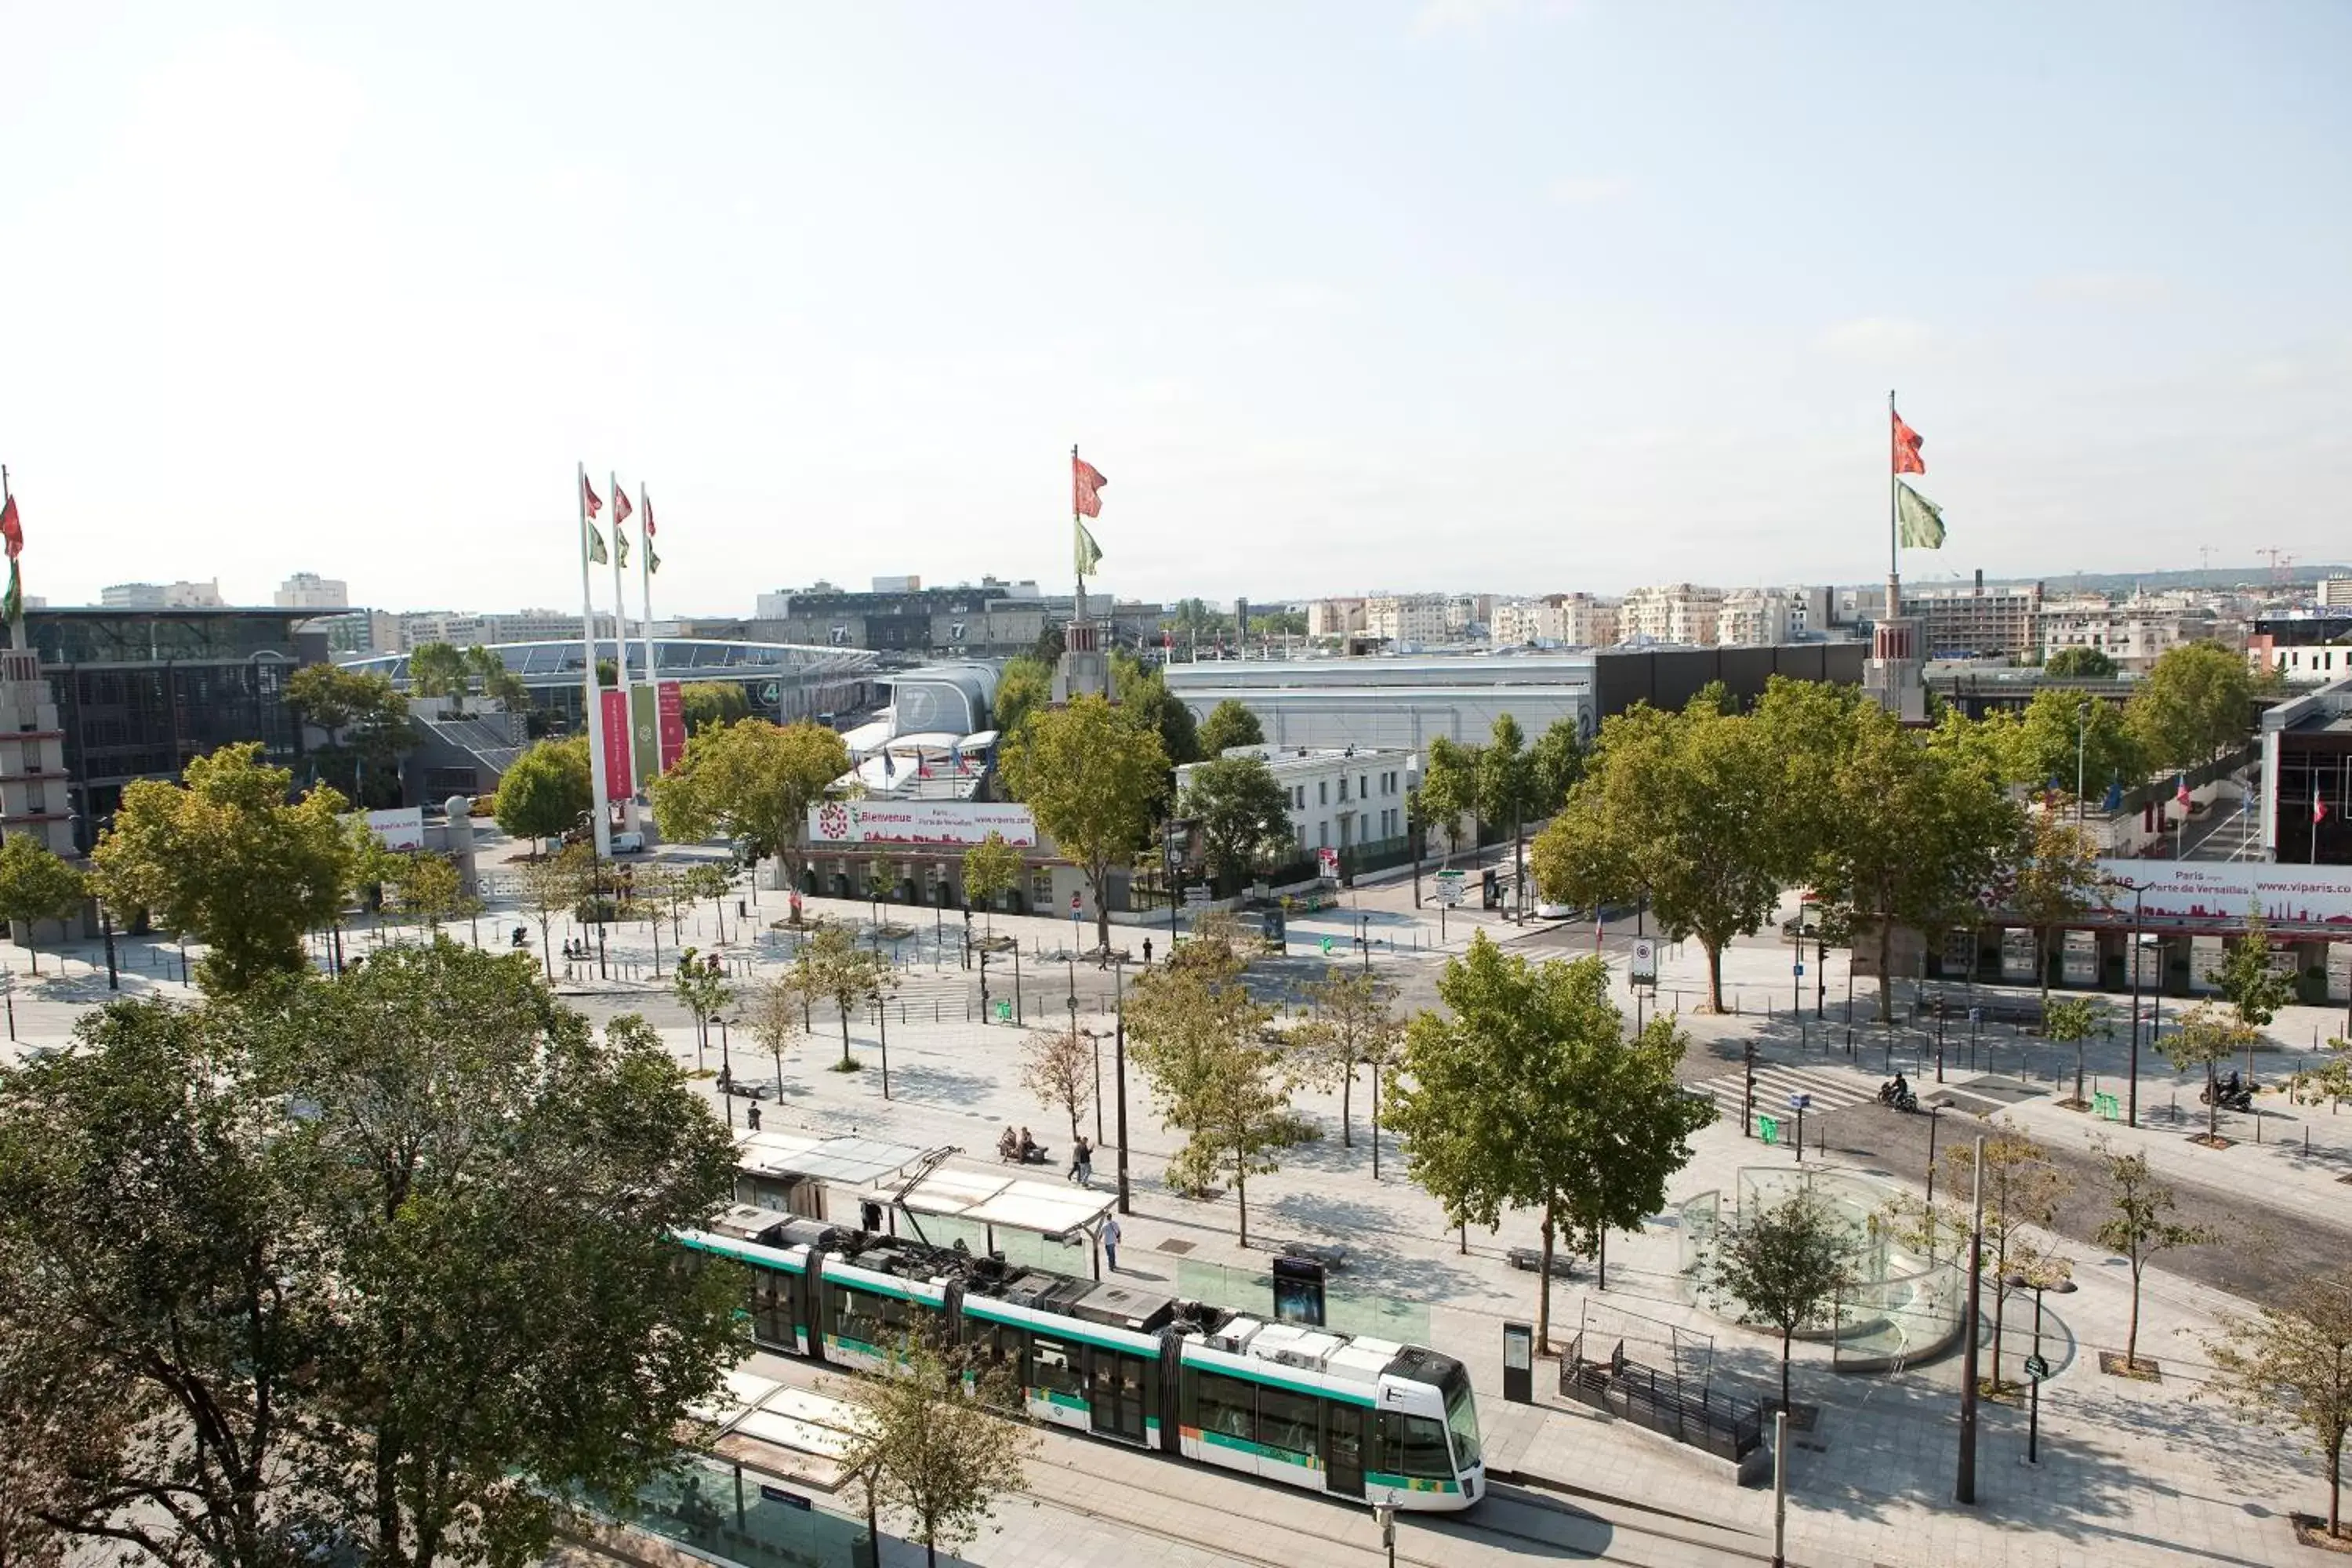 Area and facilities in Mercure Paris Vaugirard Porte De Versailles